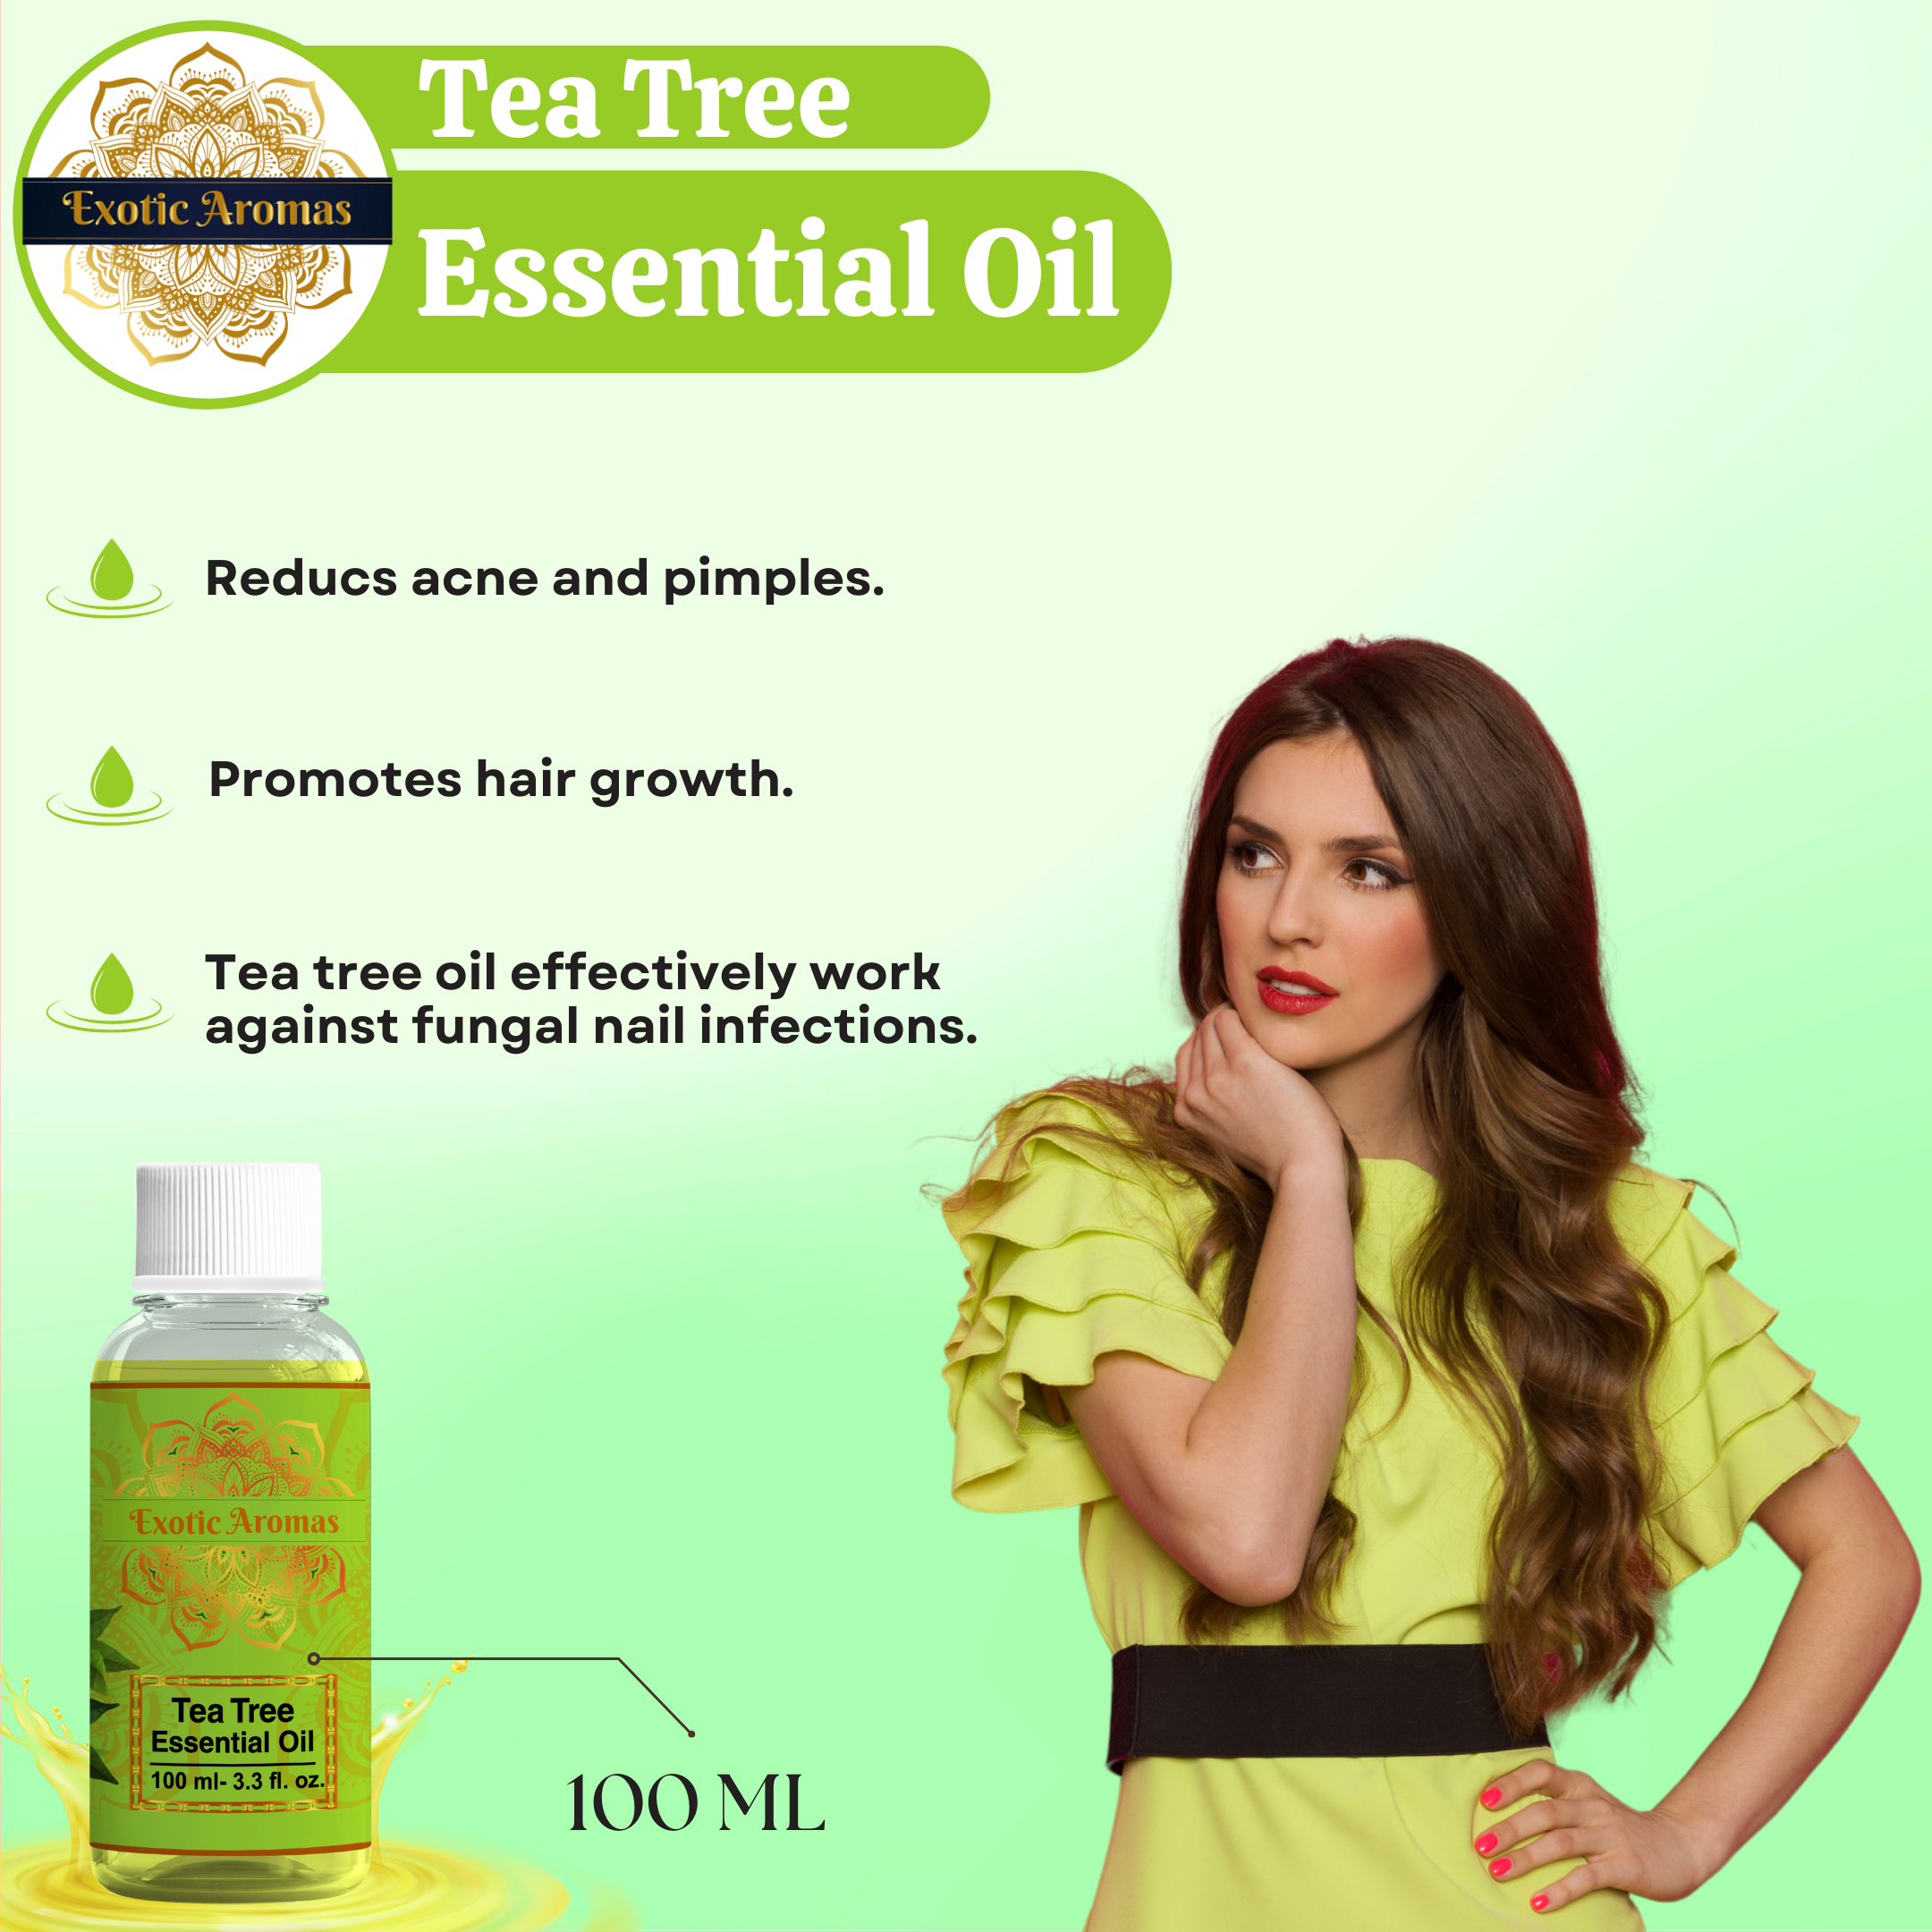 Tea Tree Oil for Skin, Hair, Face, Acne Care